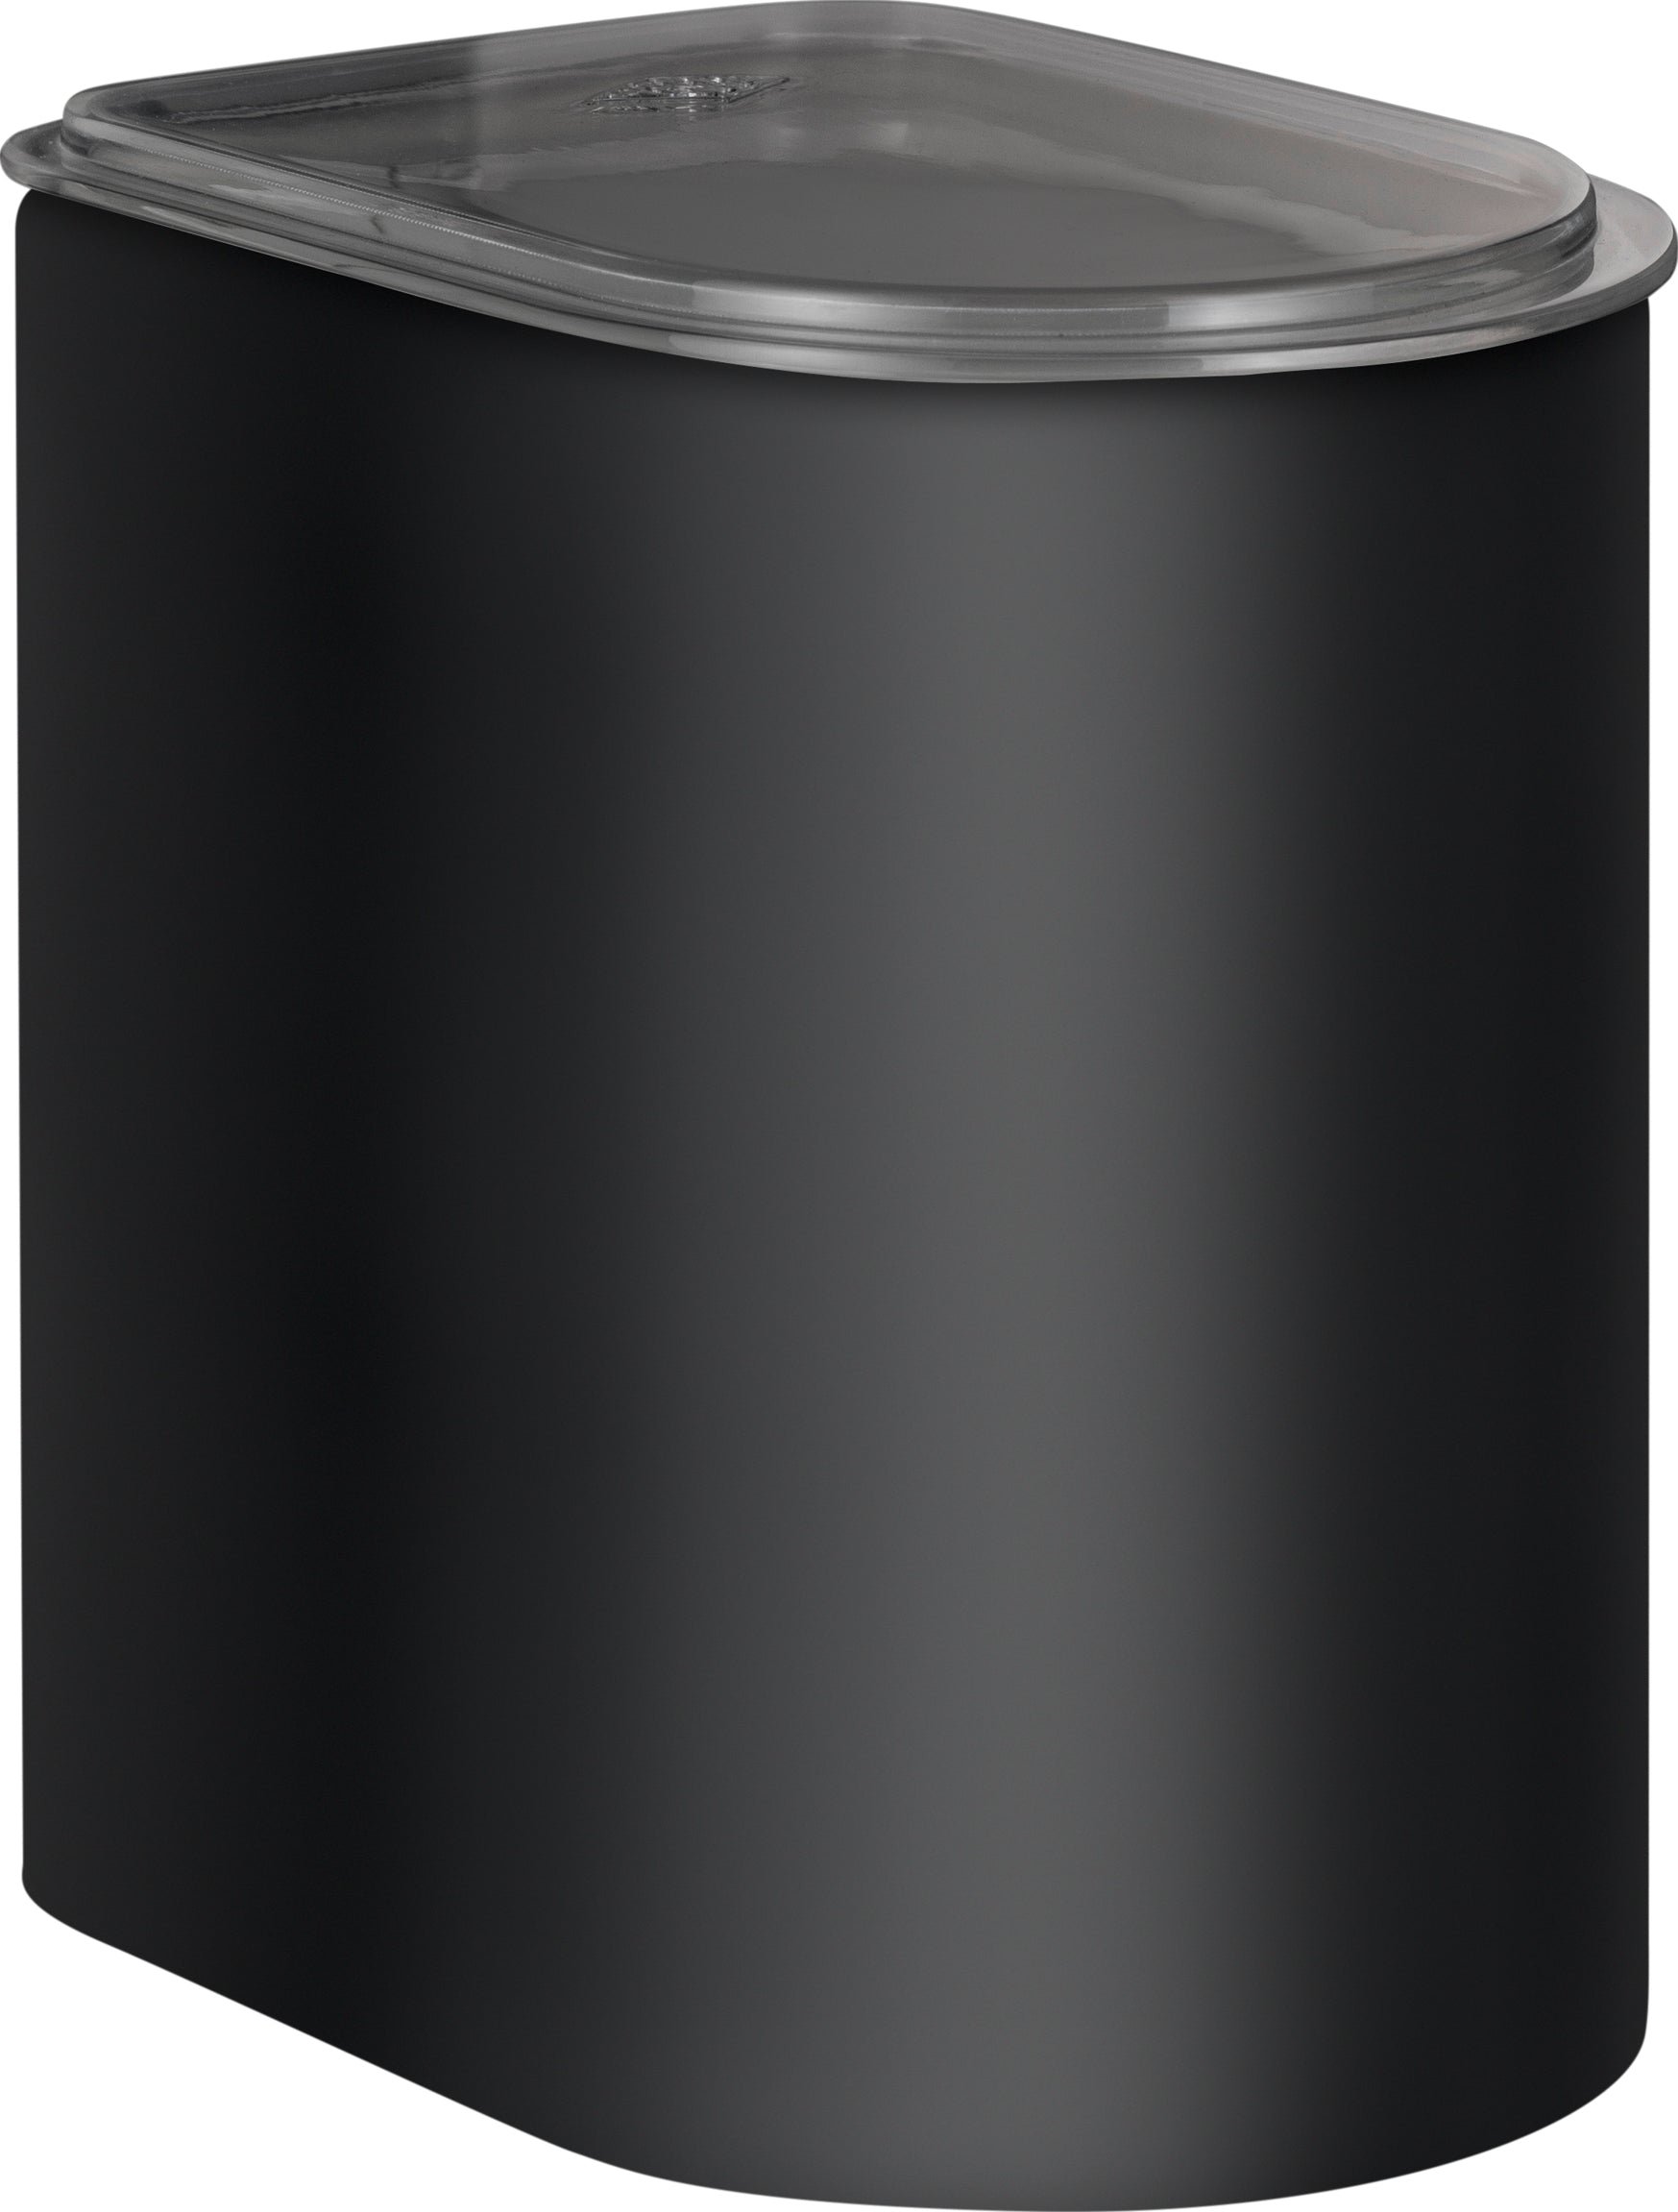 Wesco Canister 2,2 litro con tapa acrílica, Matt negro